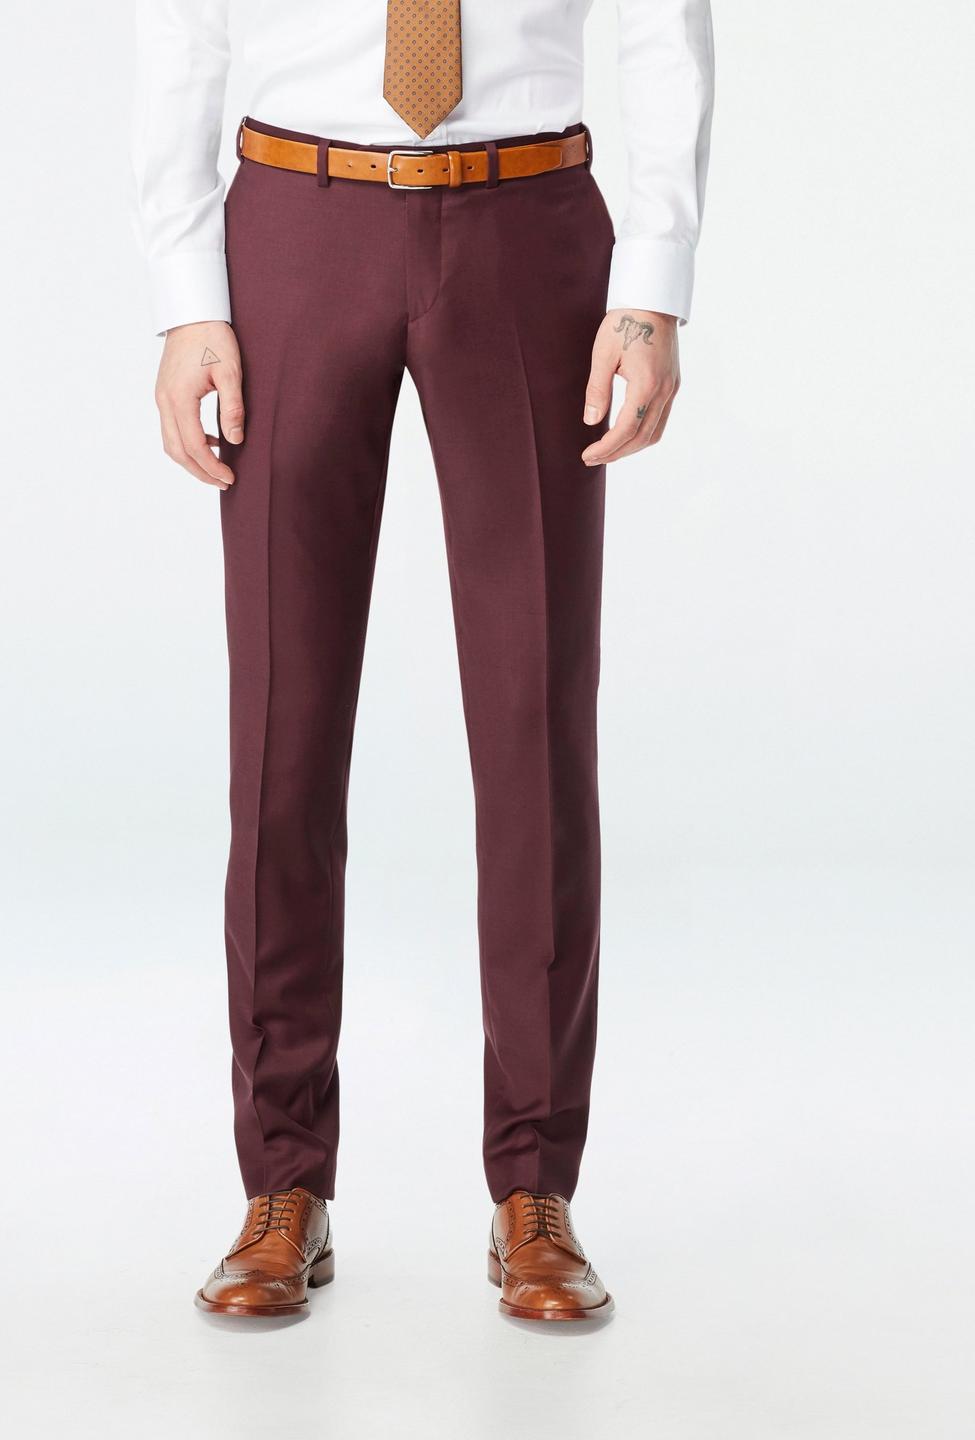 burgundy dress pants